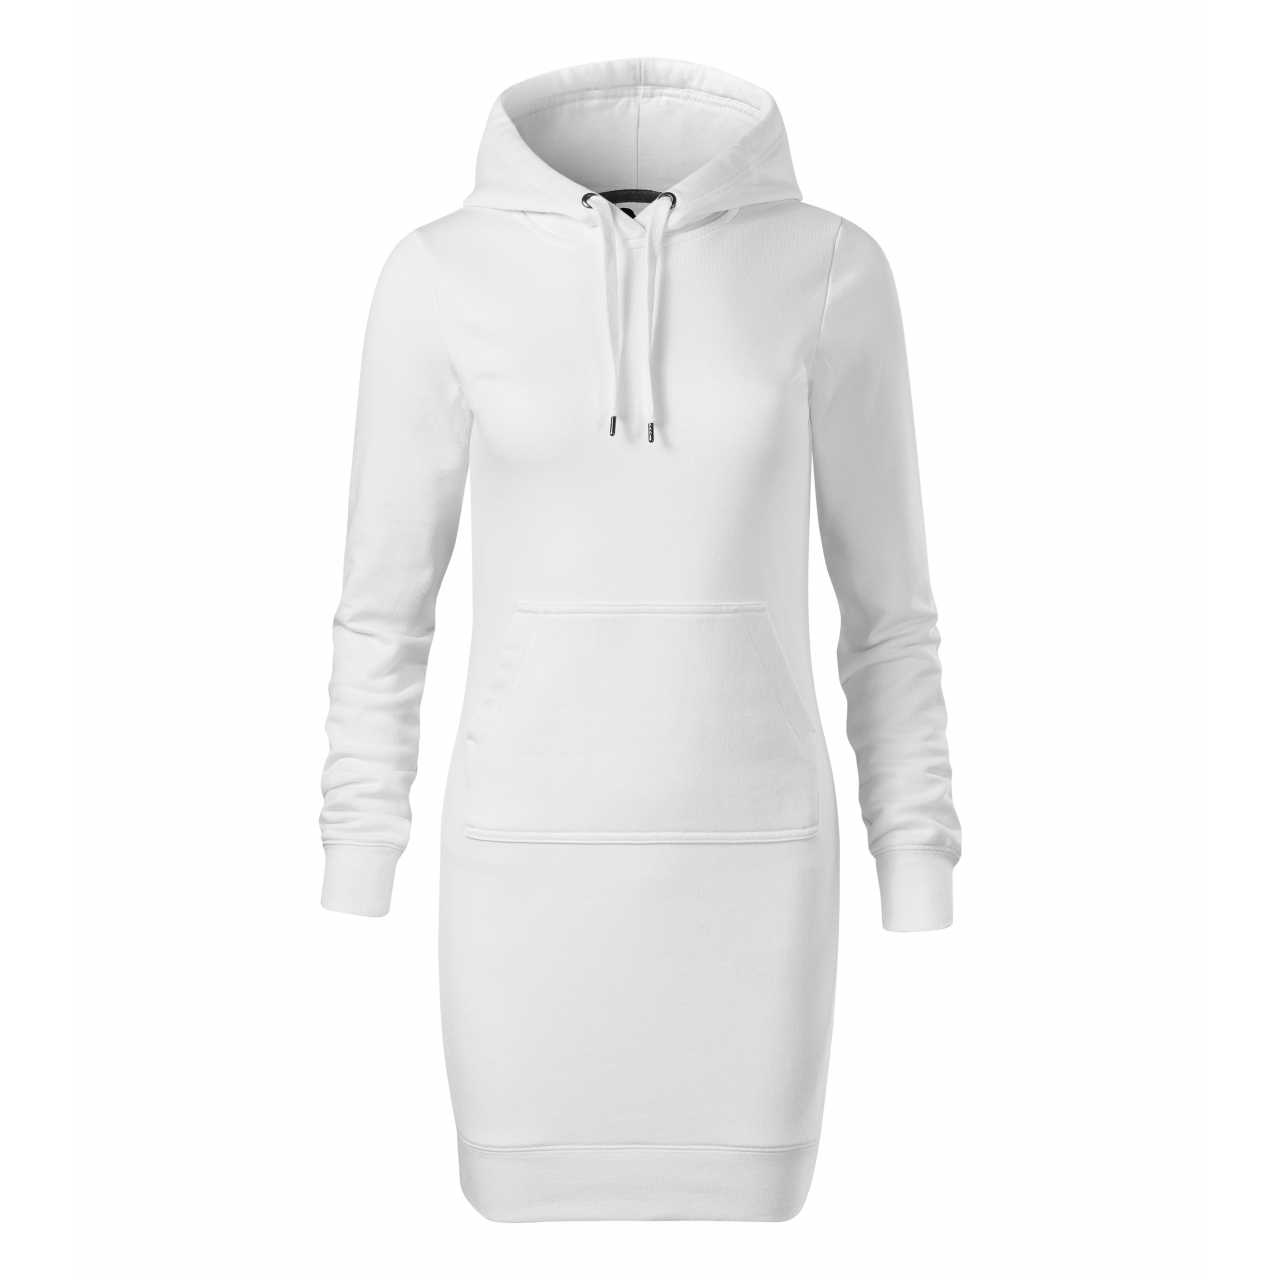 Šaty dámské Malfini Snap - bílé, XXL